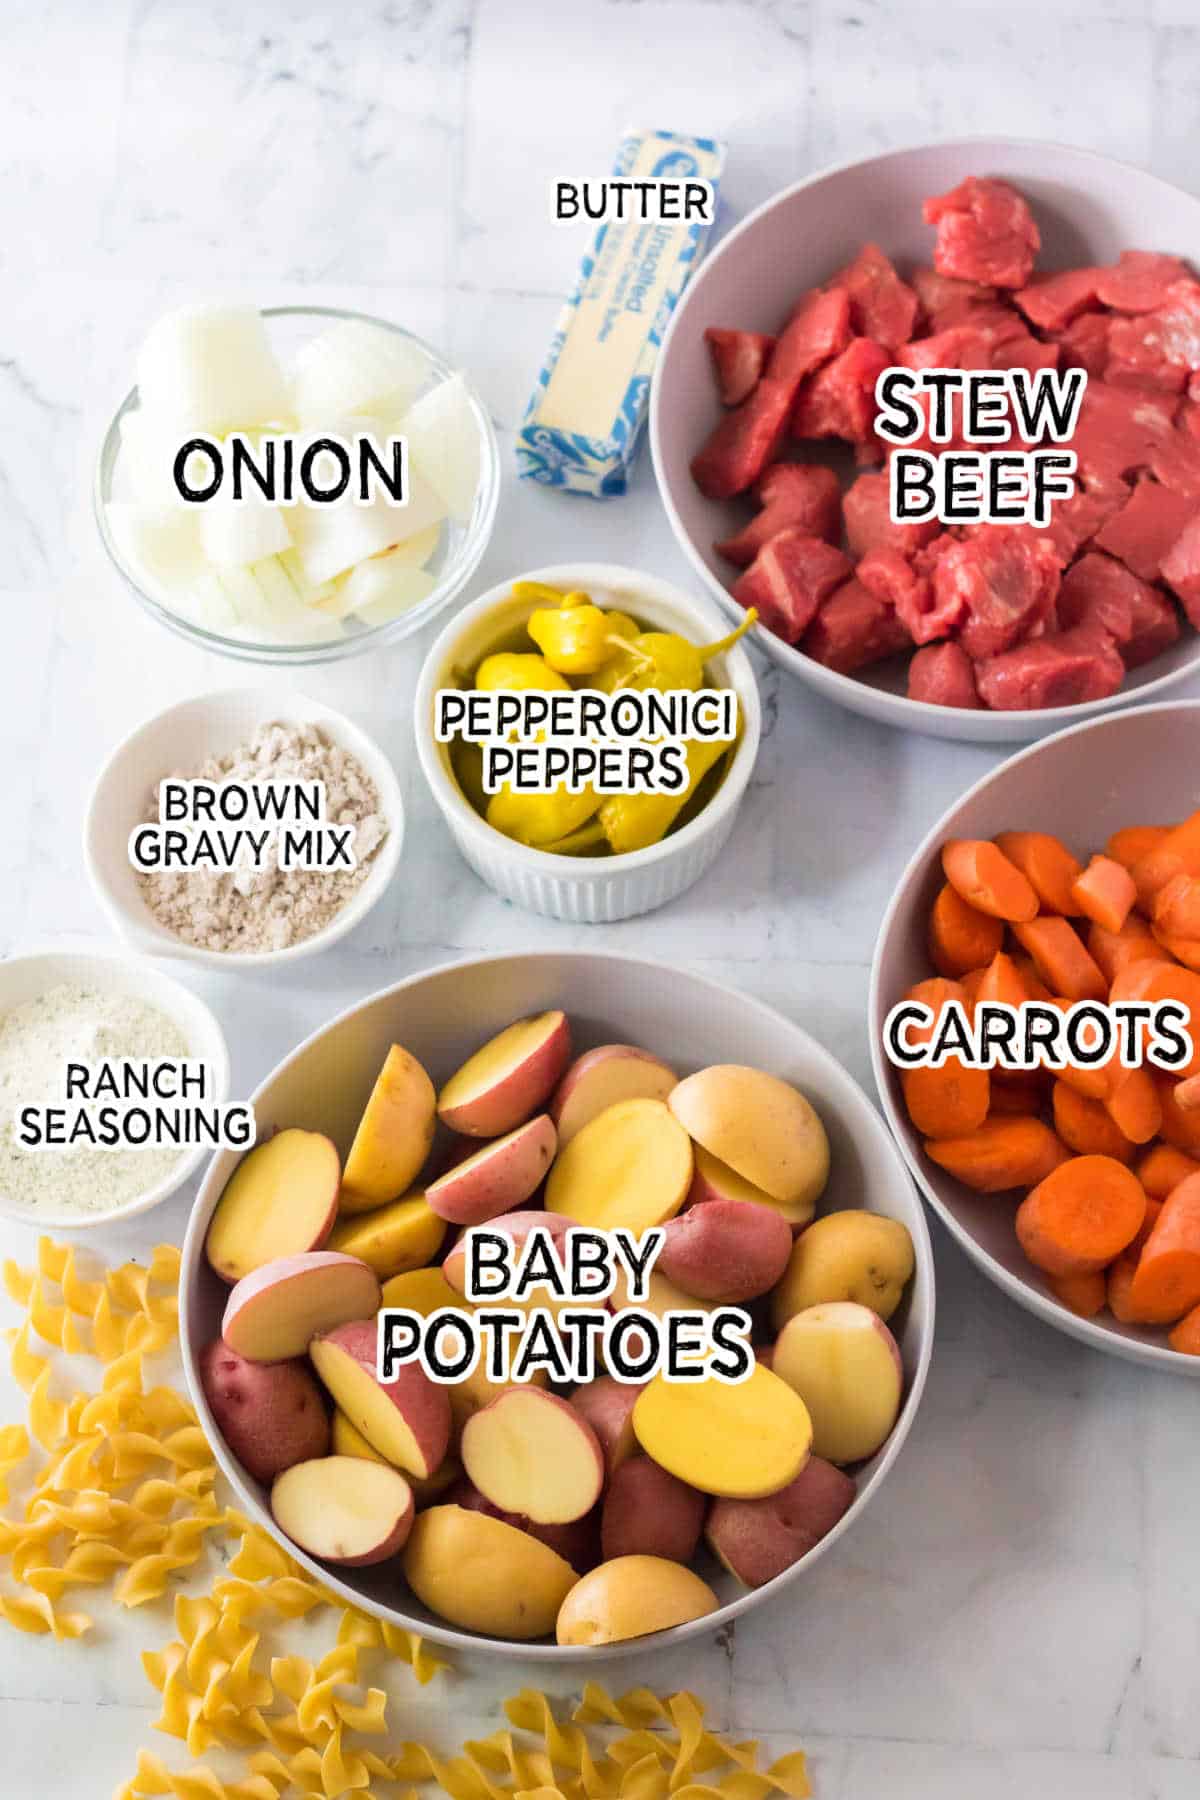 Ingredients to make Mississippi Beef Stew.